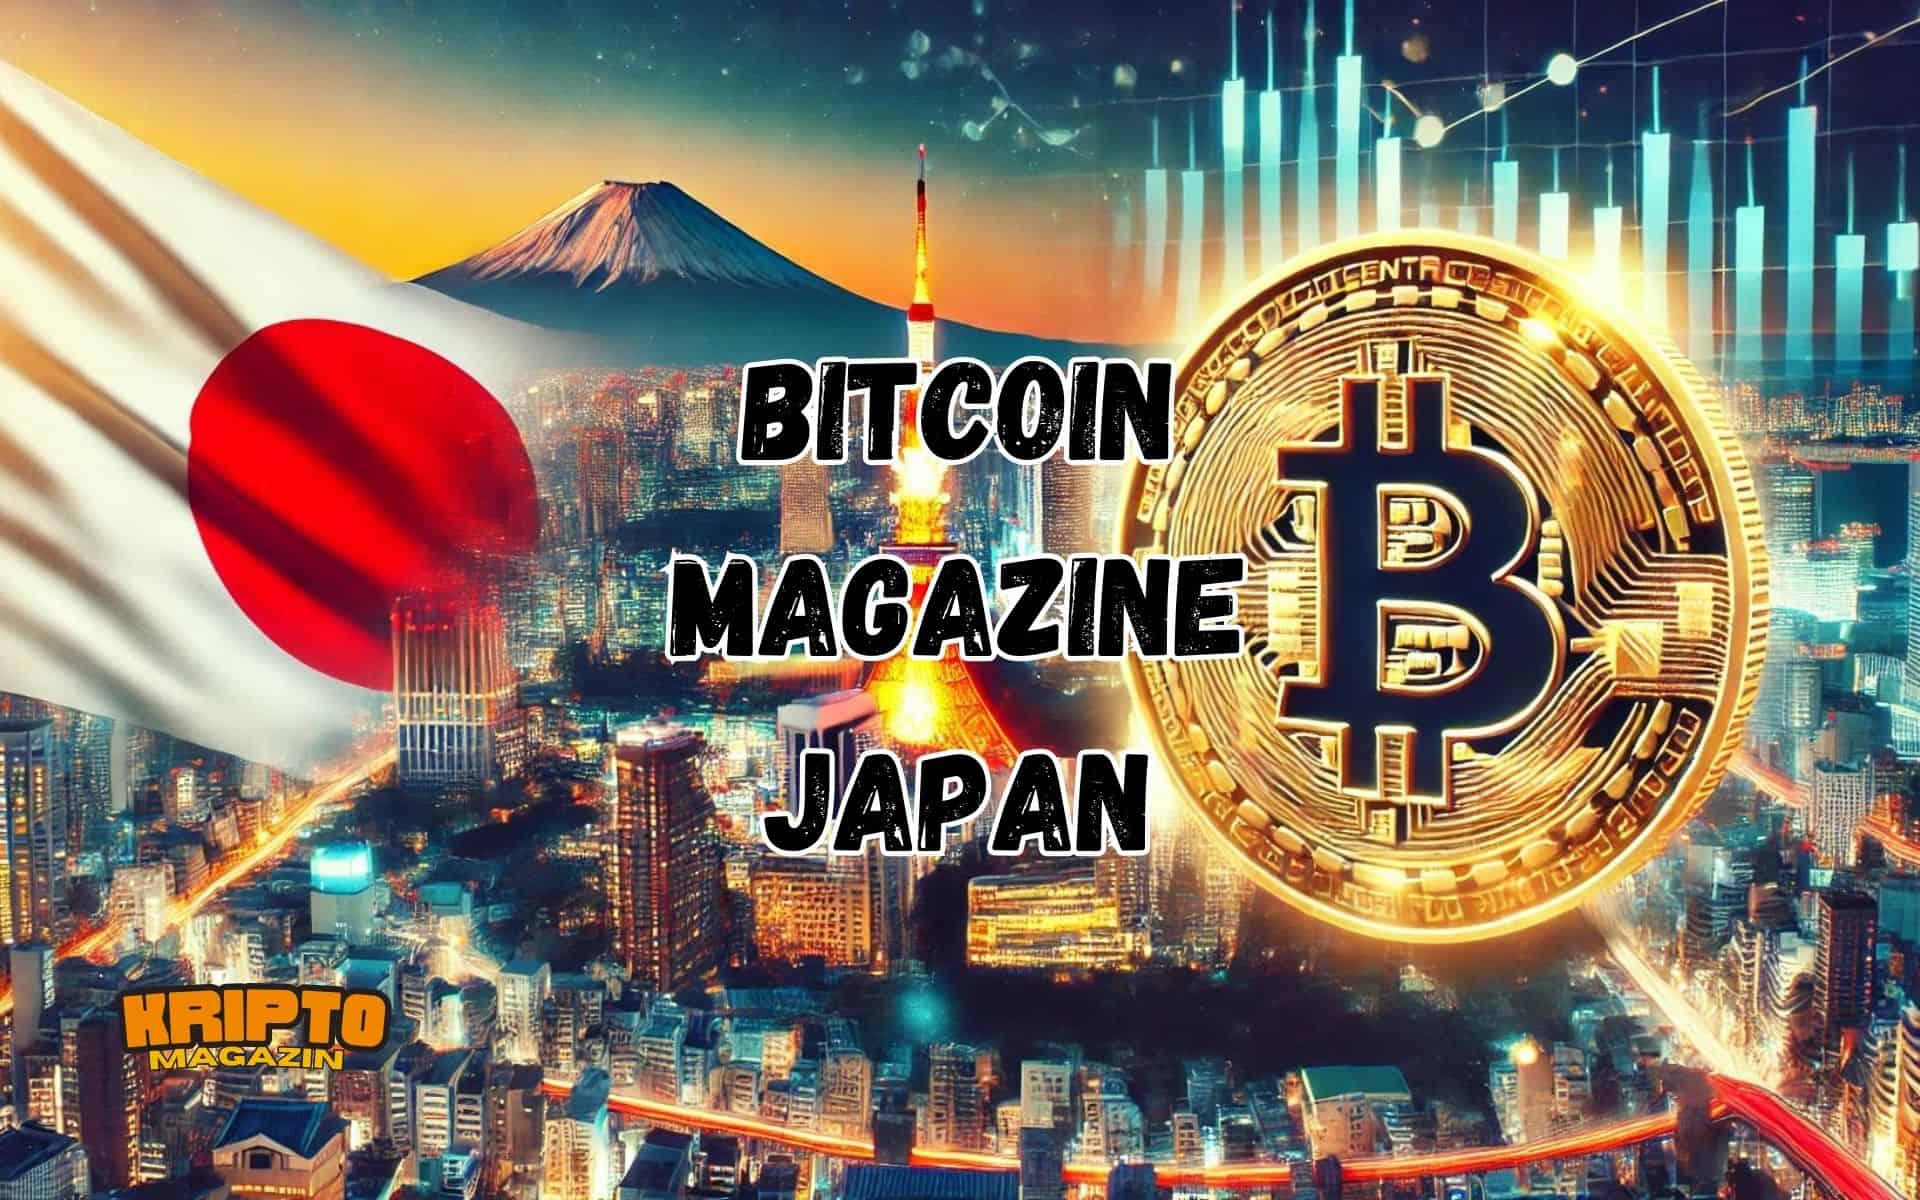 Kriptomagazin bitcoin magazine japan